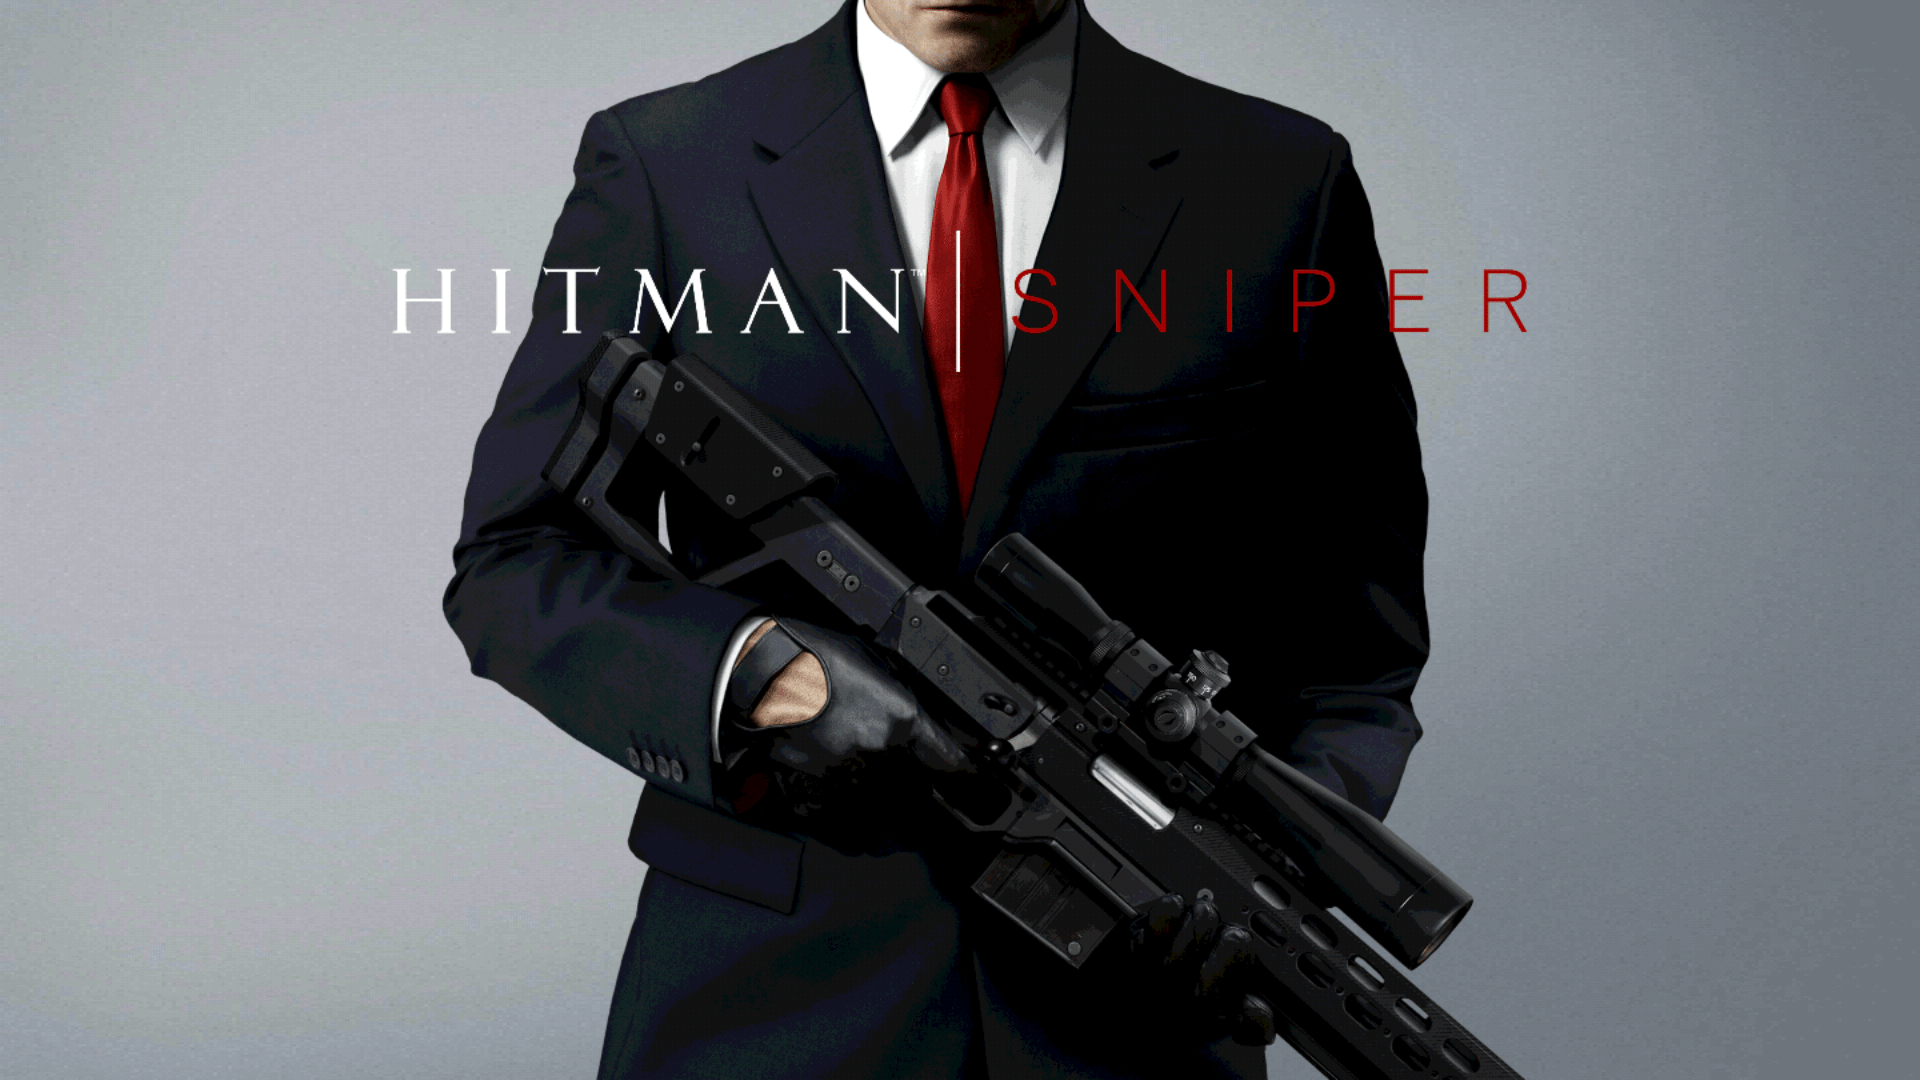 download free hitman sniper 2